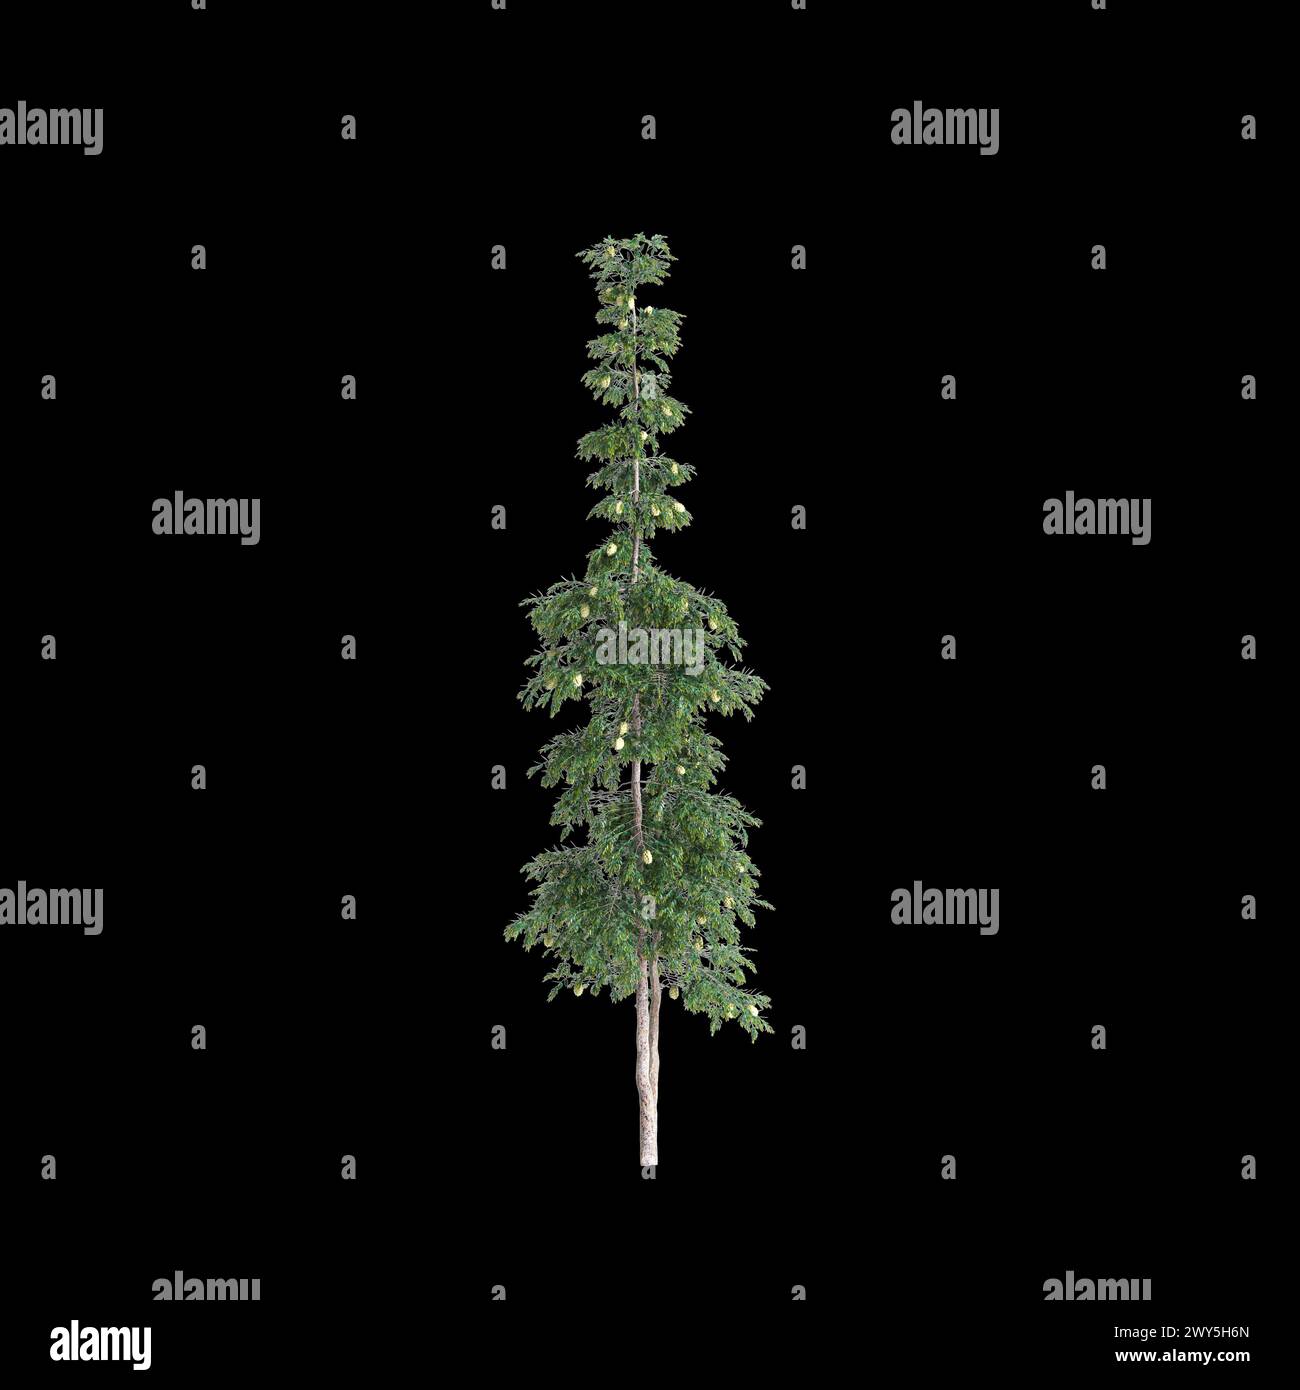 3d illustration of Agathis robusta tree isolated on black background Stock Photo